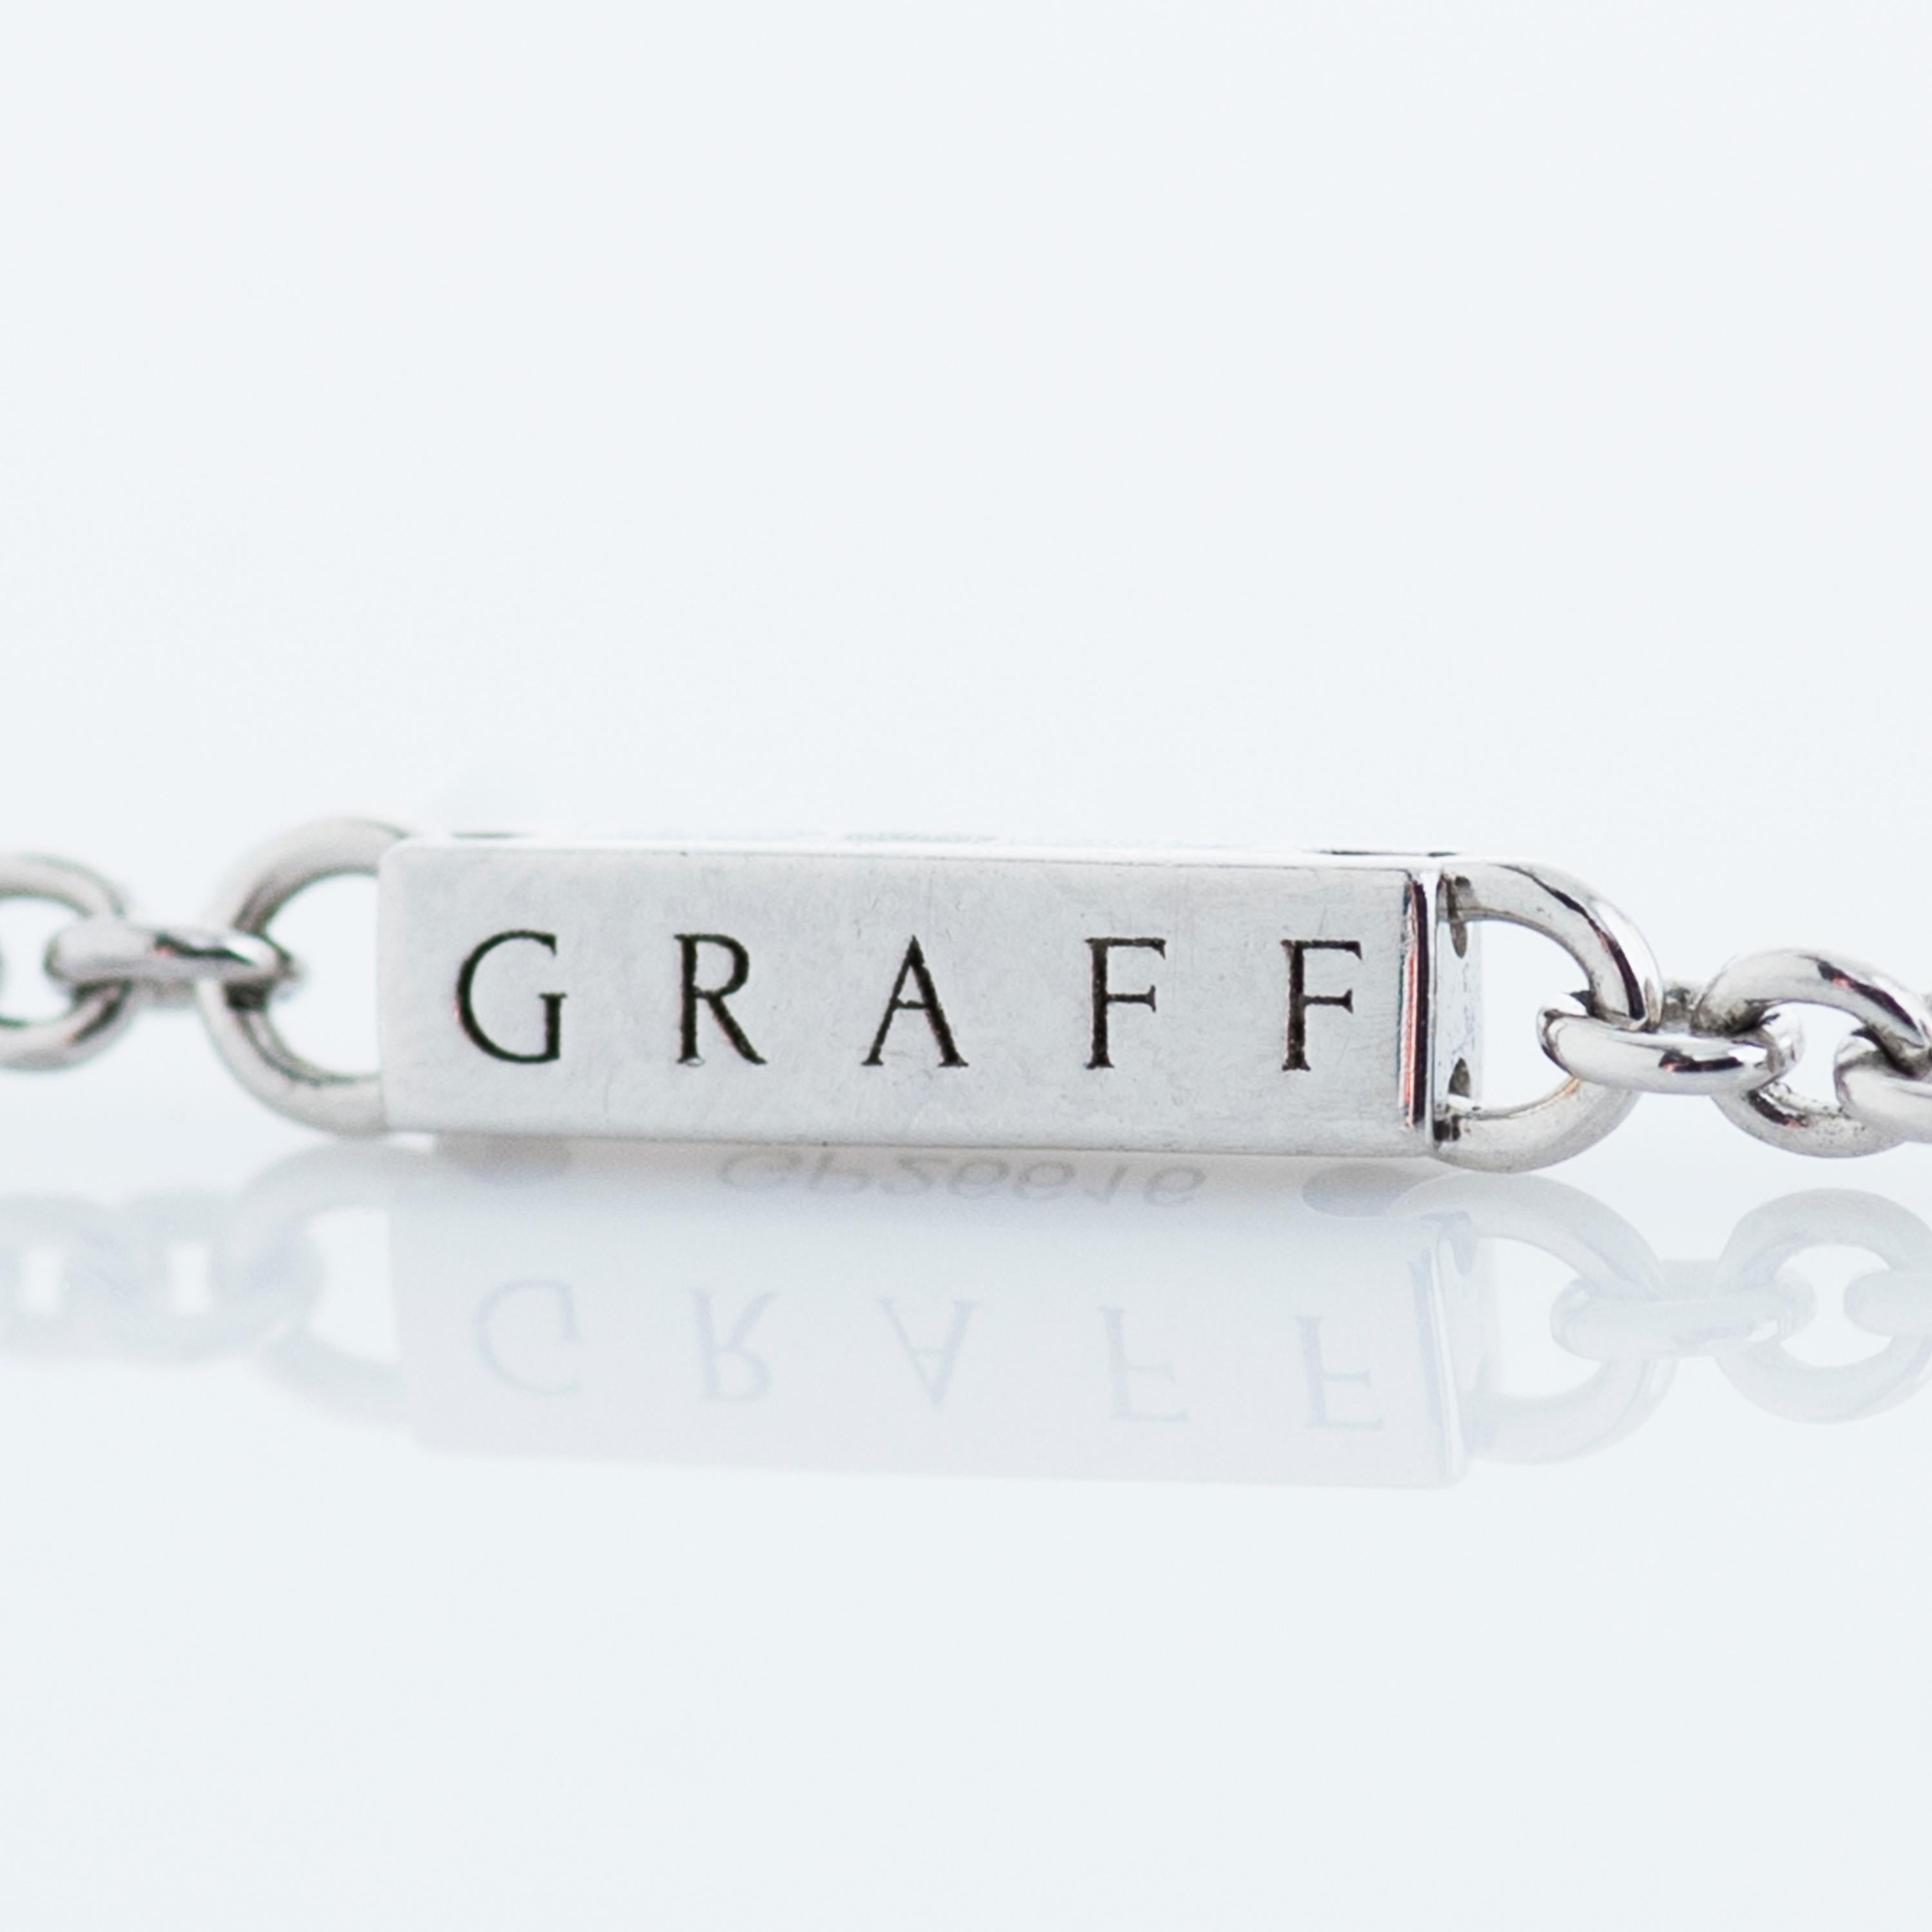 graff necklace